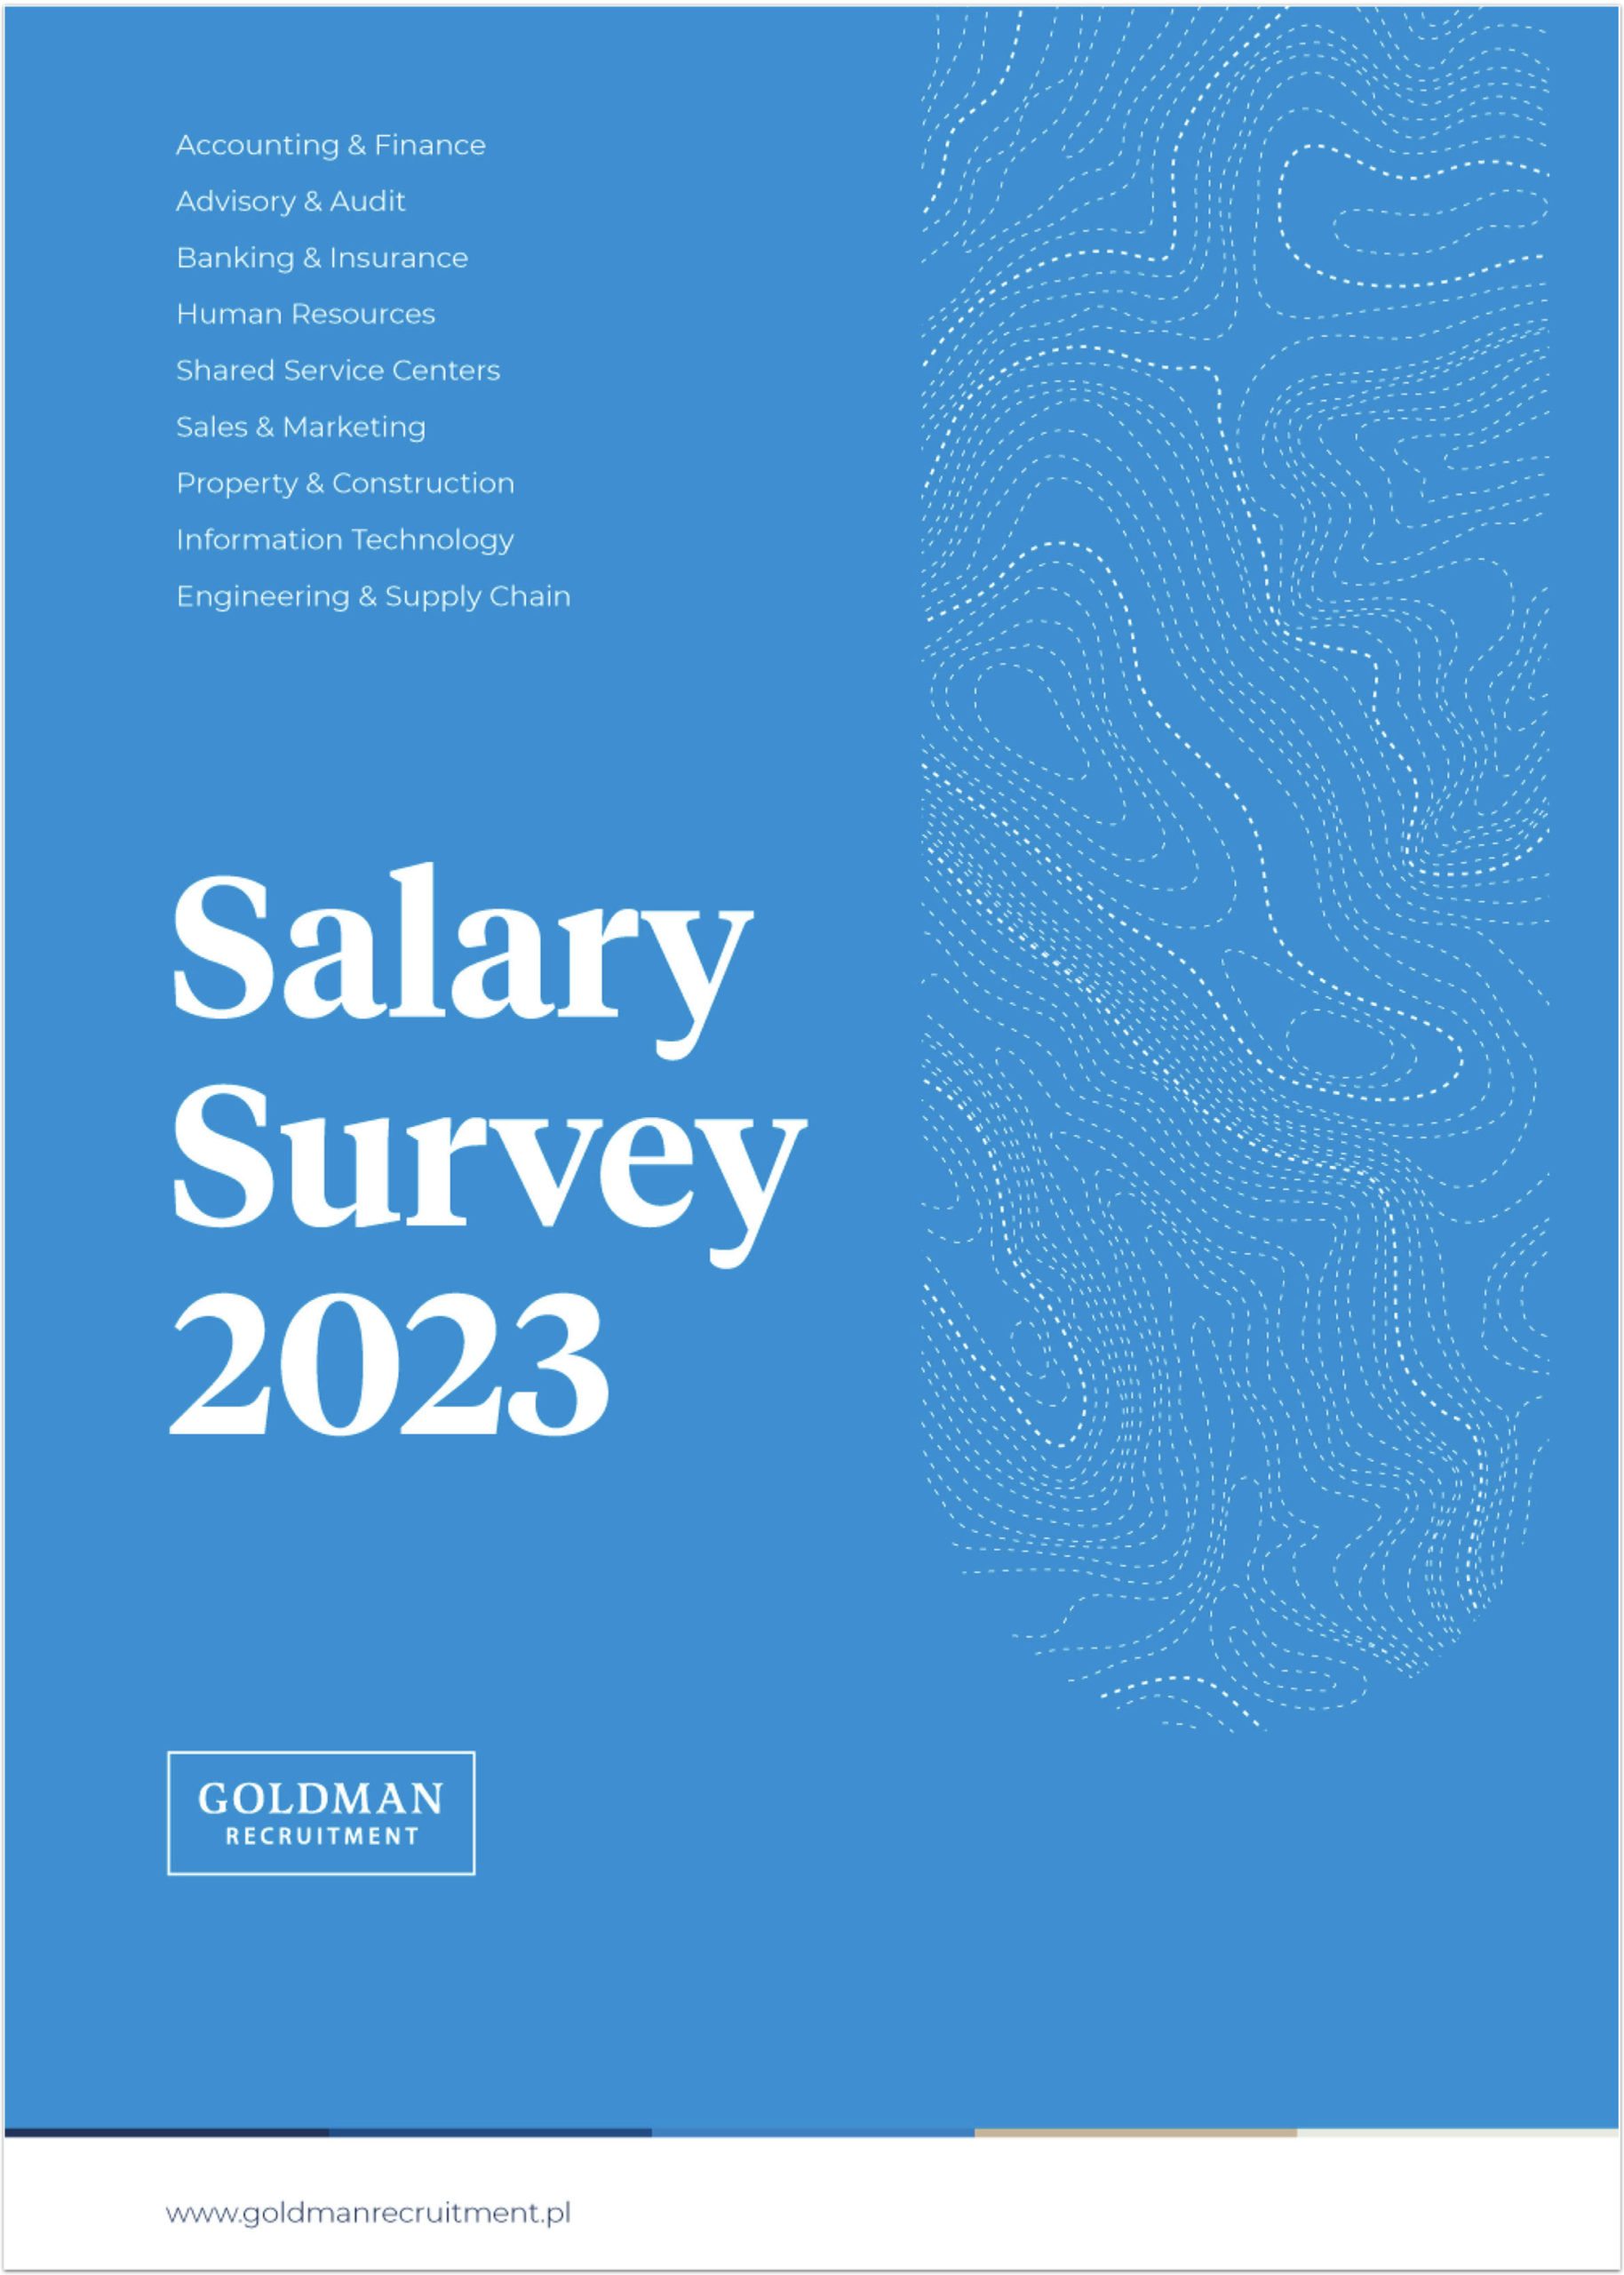 Goldman Recruitment Salary Survey 2023